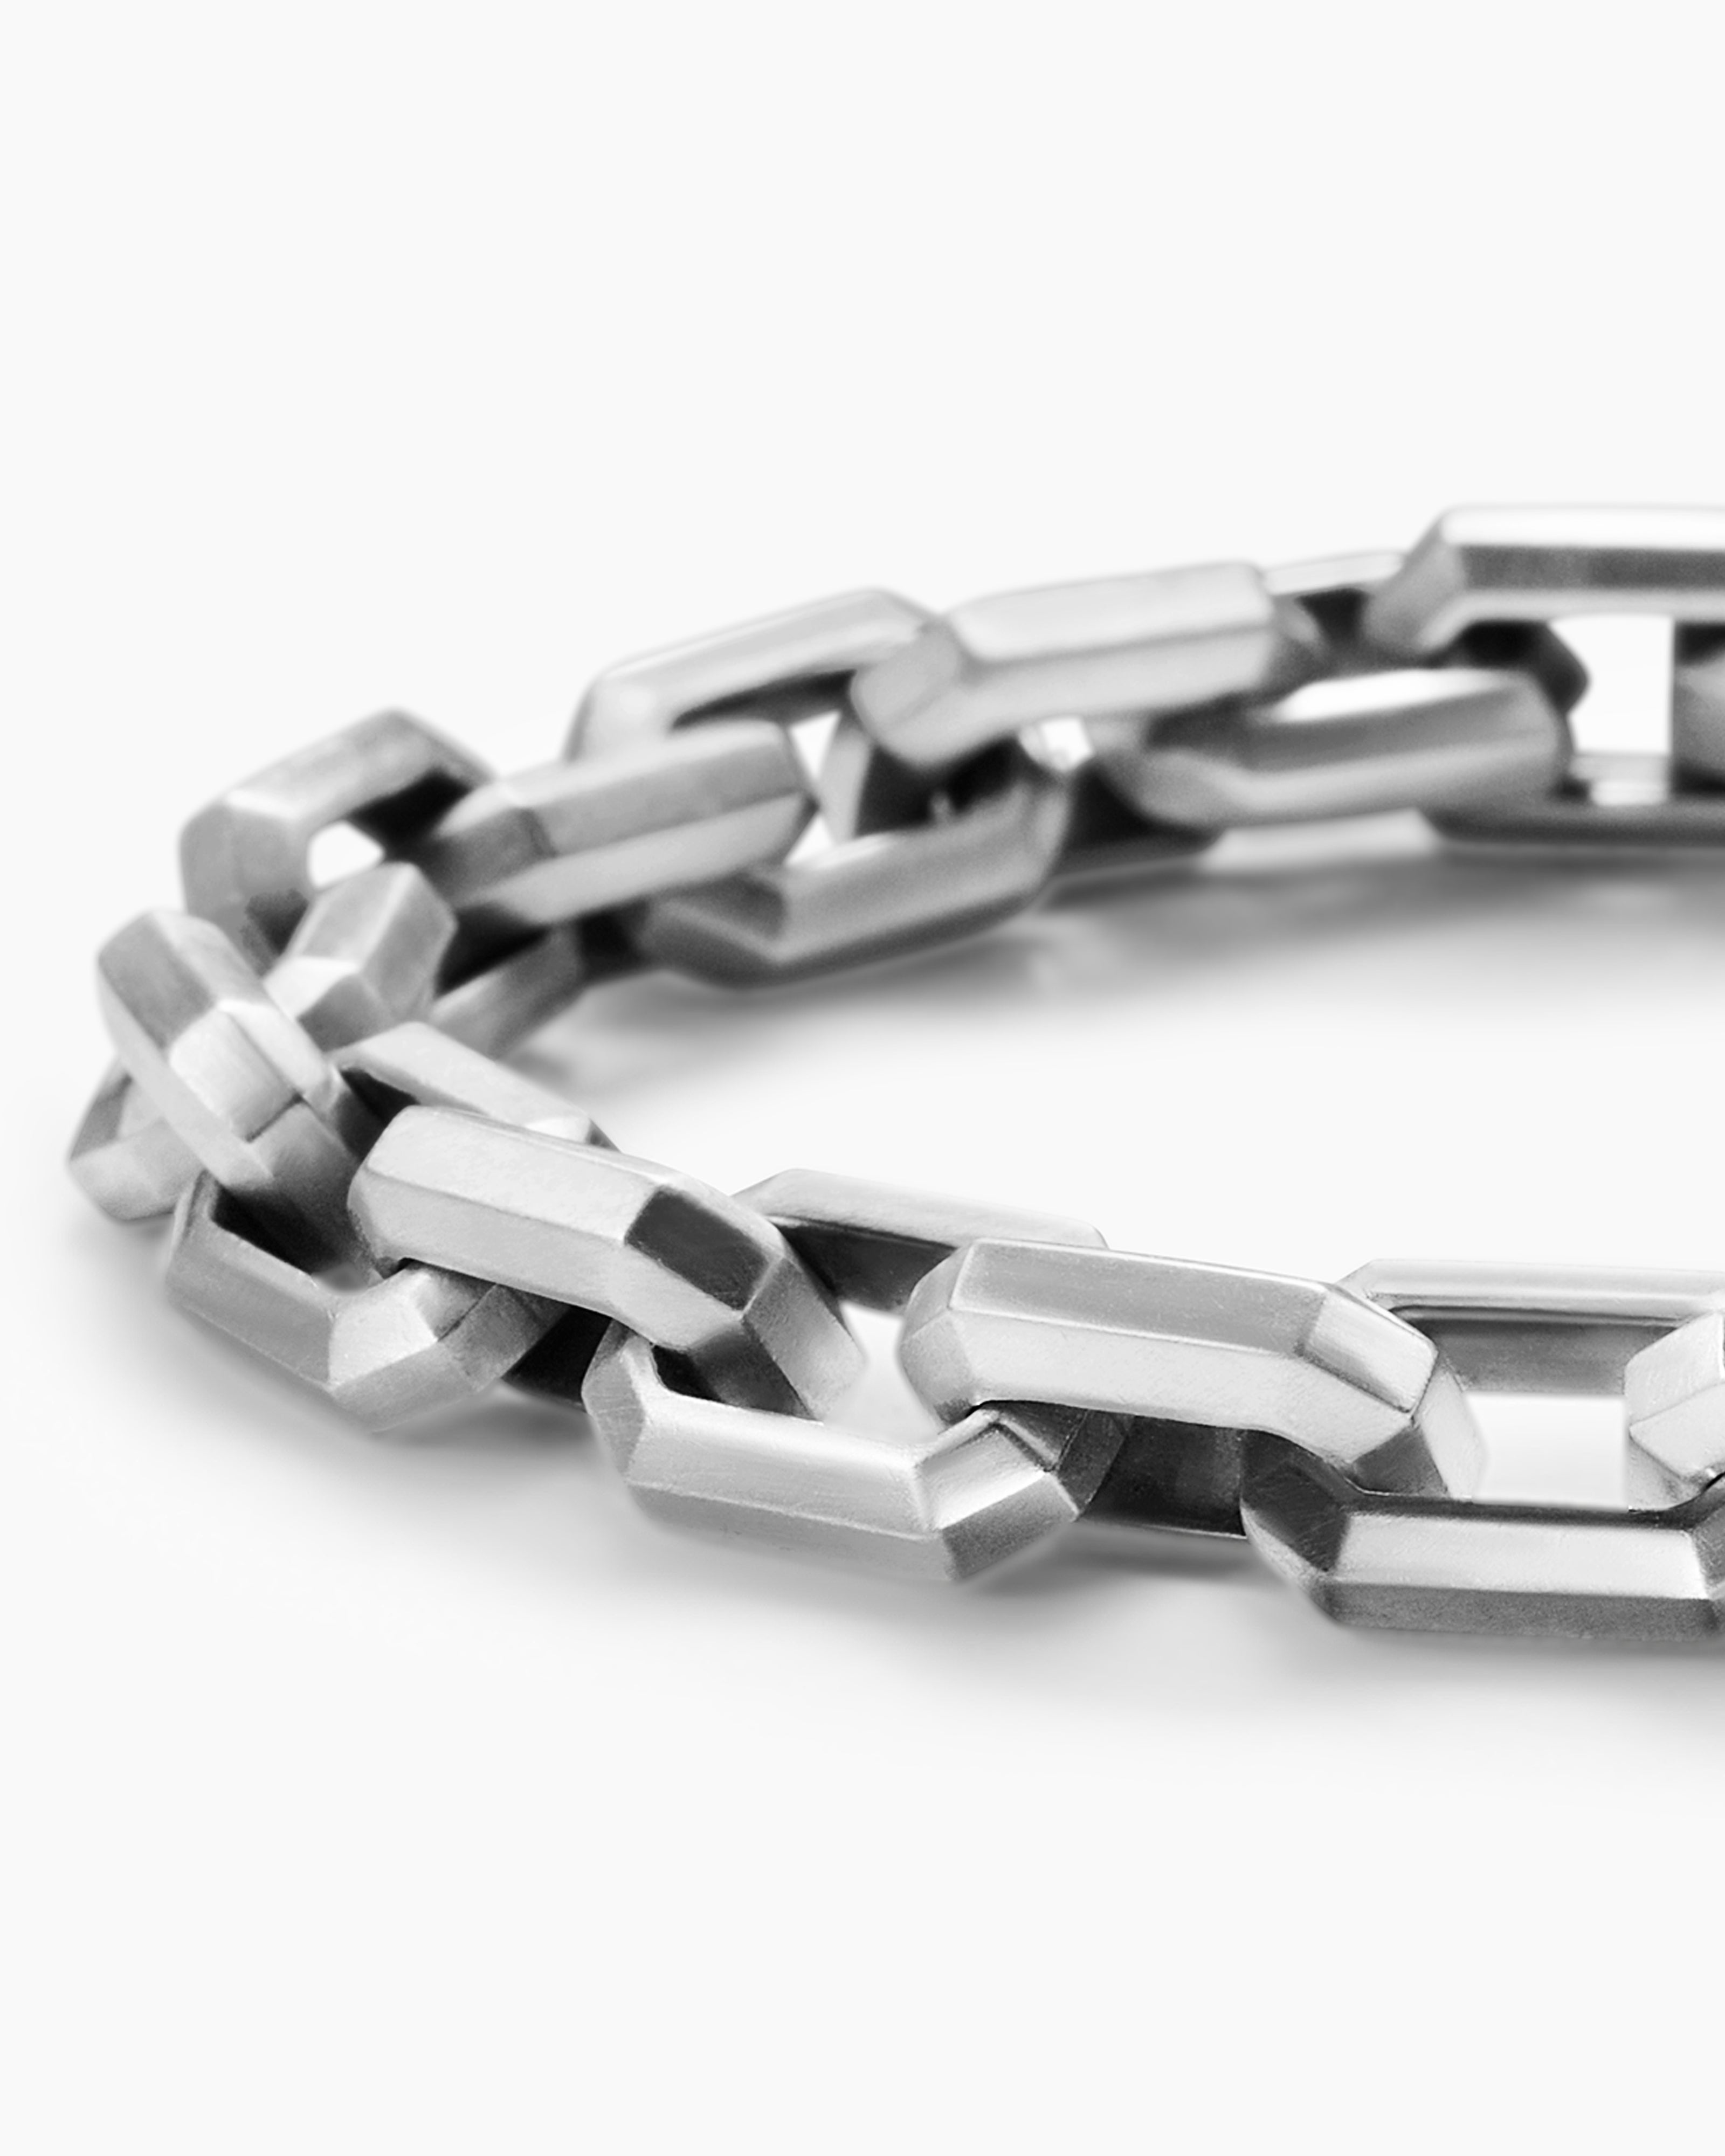 David Yurman Men's Streamline Heirloom Link Bracelet